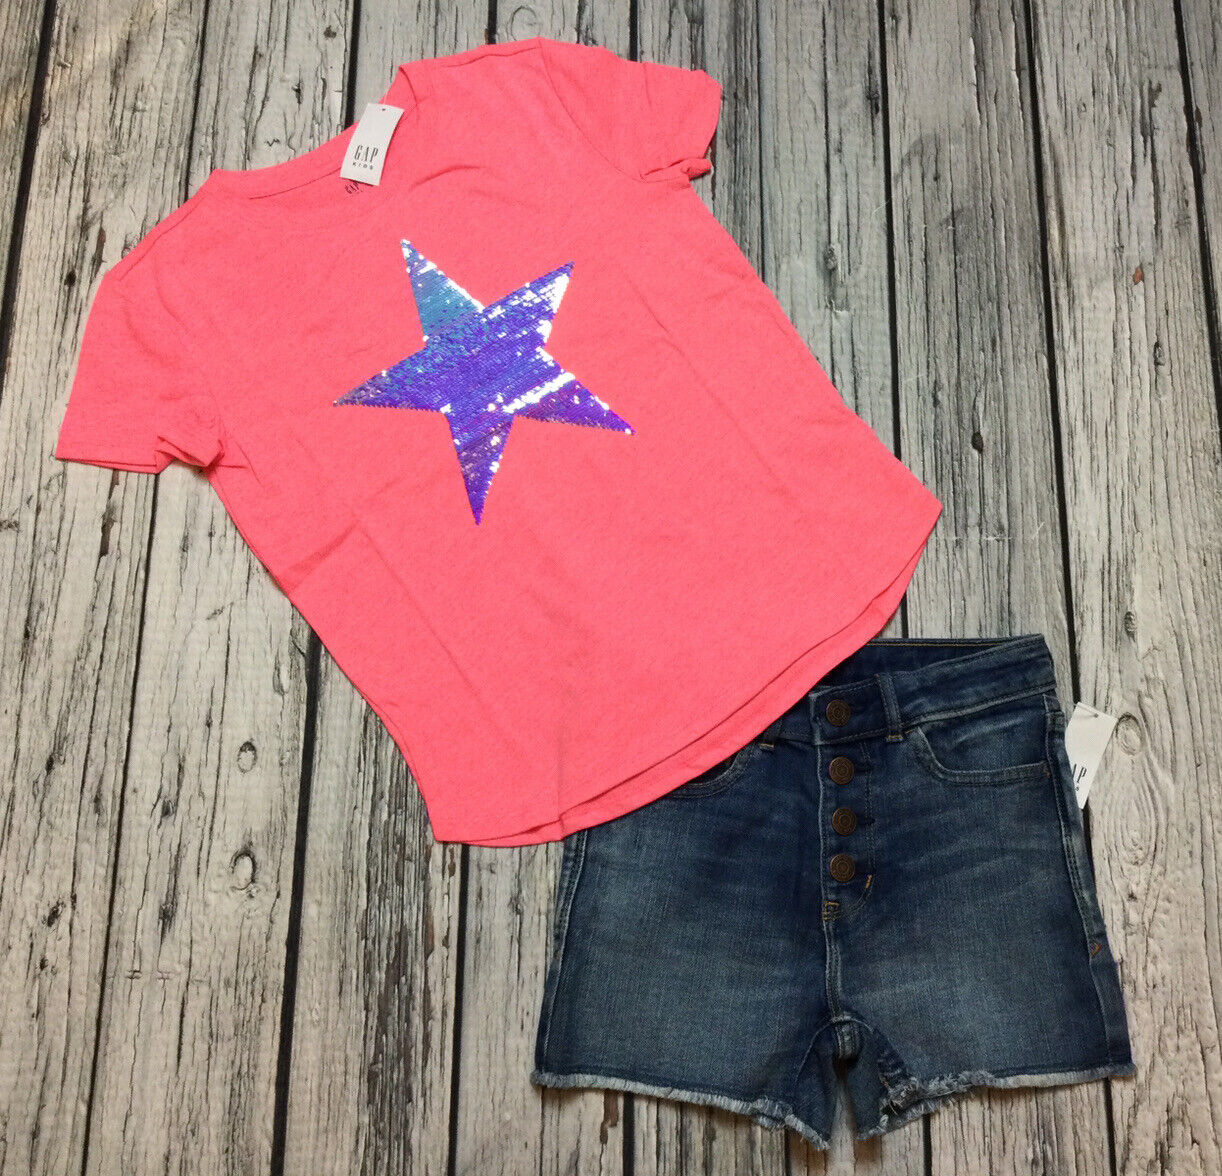 Gap Kids Girls Size 7 Pink Max 71% OFF Short Shirt Star New product Sequins Flip Denim